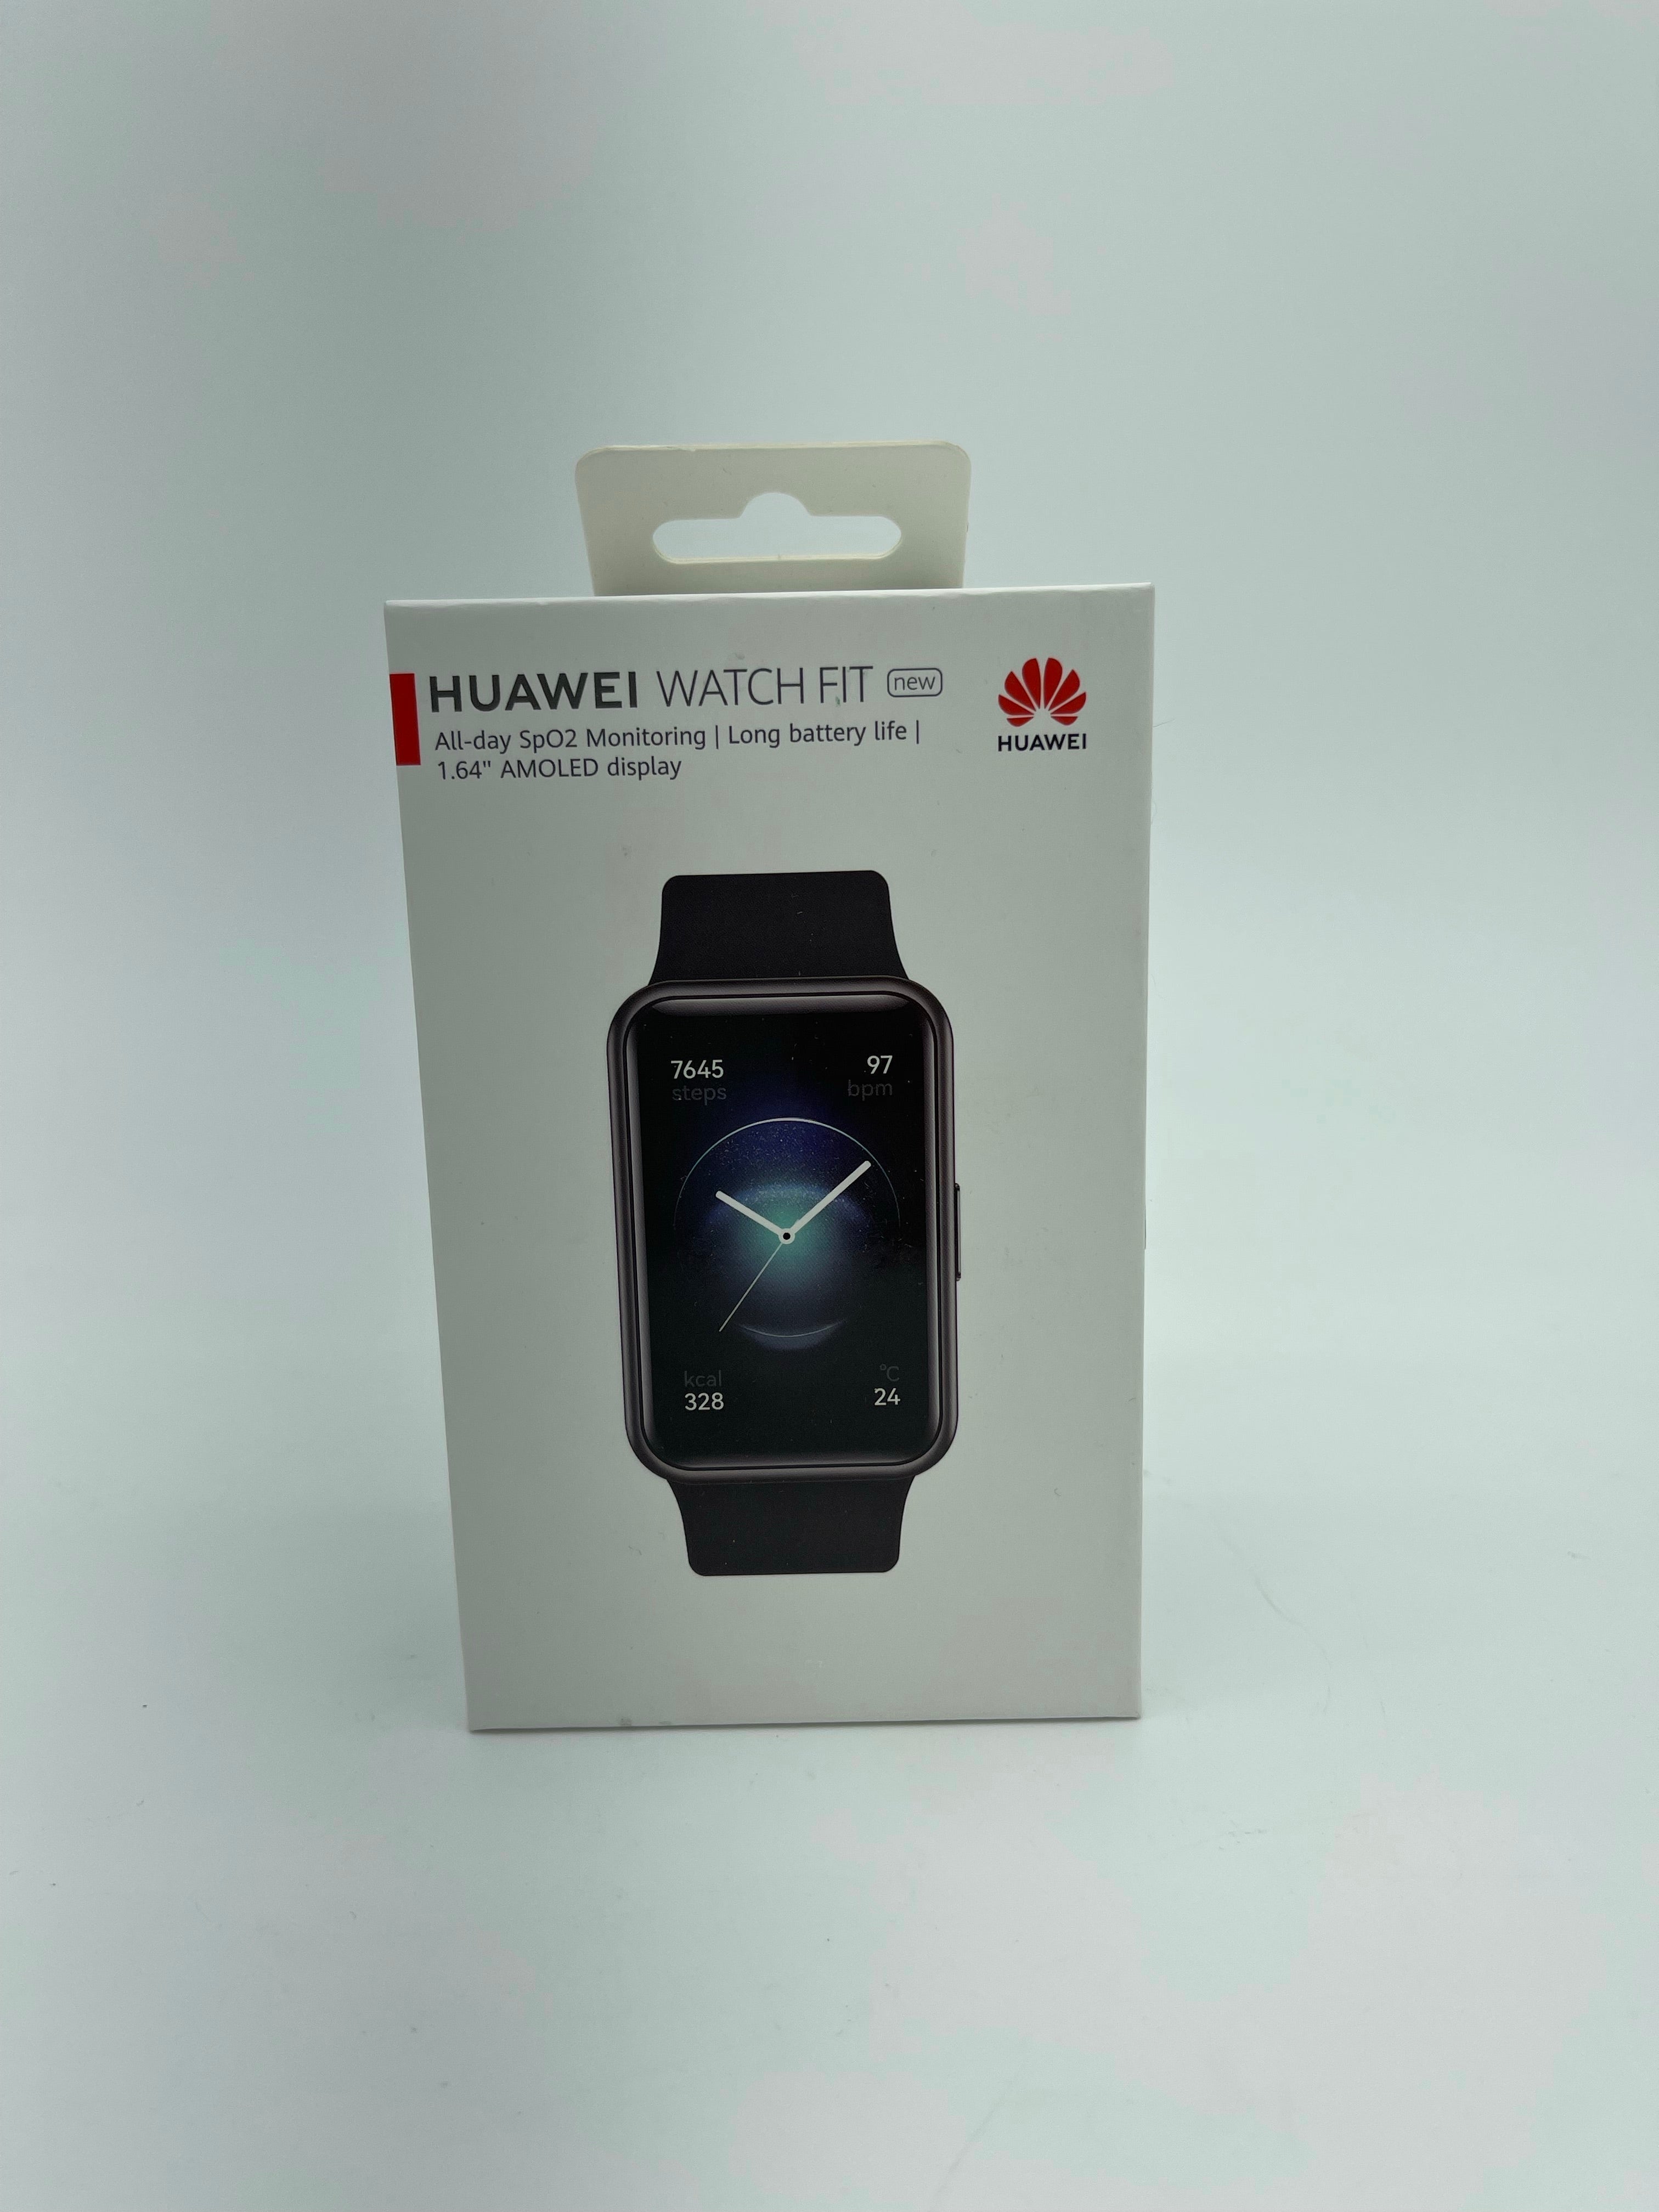 HUAWEI WATCH FIT Smartwatch - Graphite Black - Long Battery Life, AMOLED Display (TIA-B09)